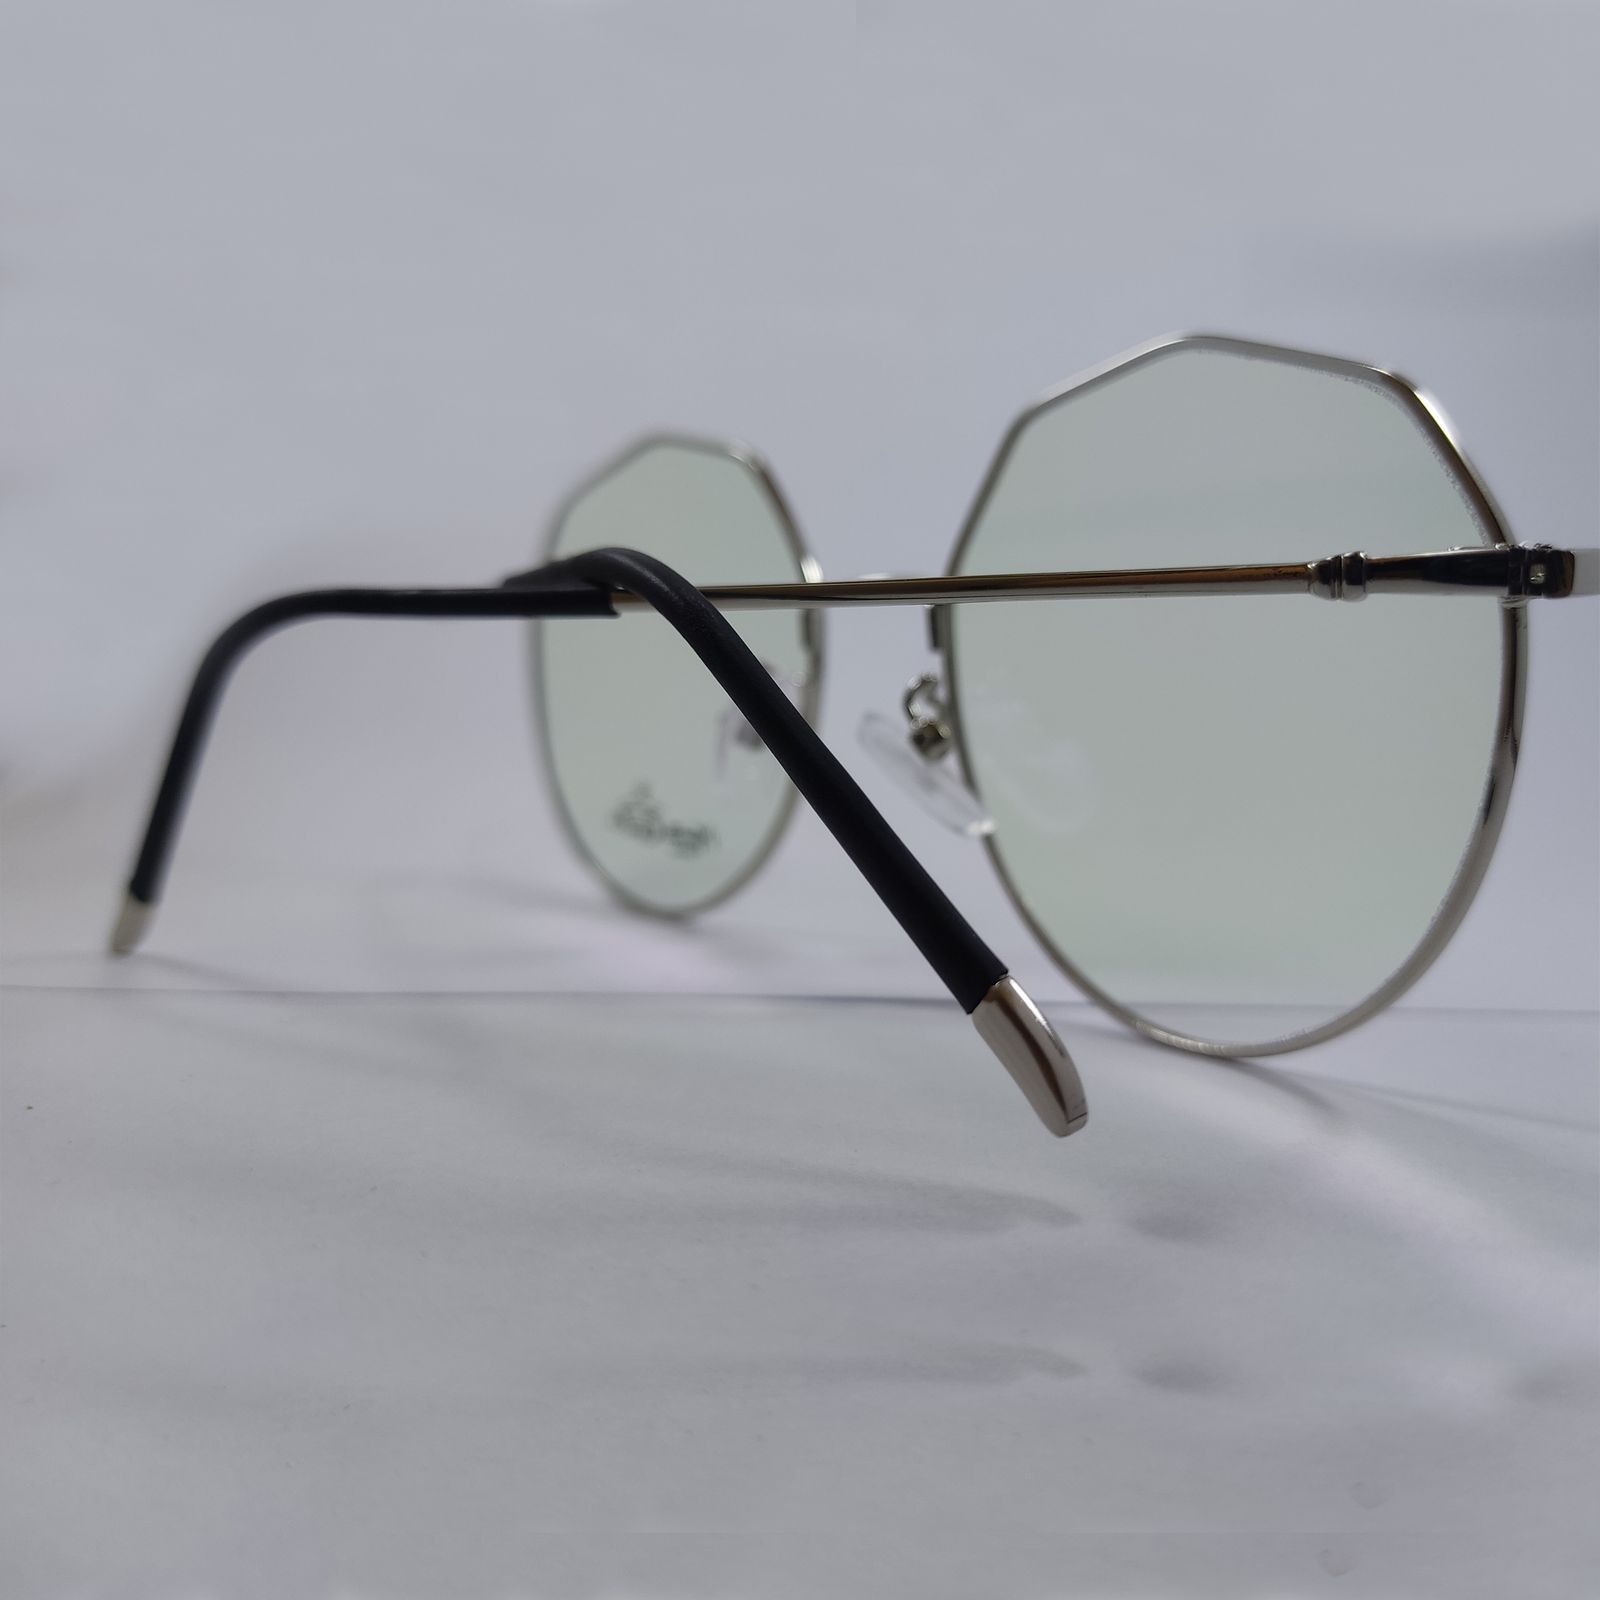 فریم عینک طبی مونته کارلو مدل 66013 کد 113 -  - 2